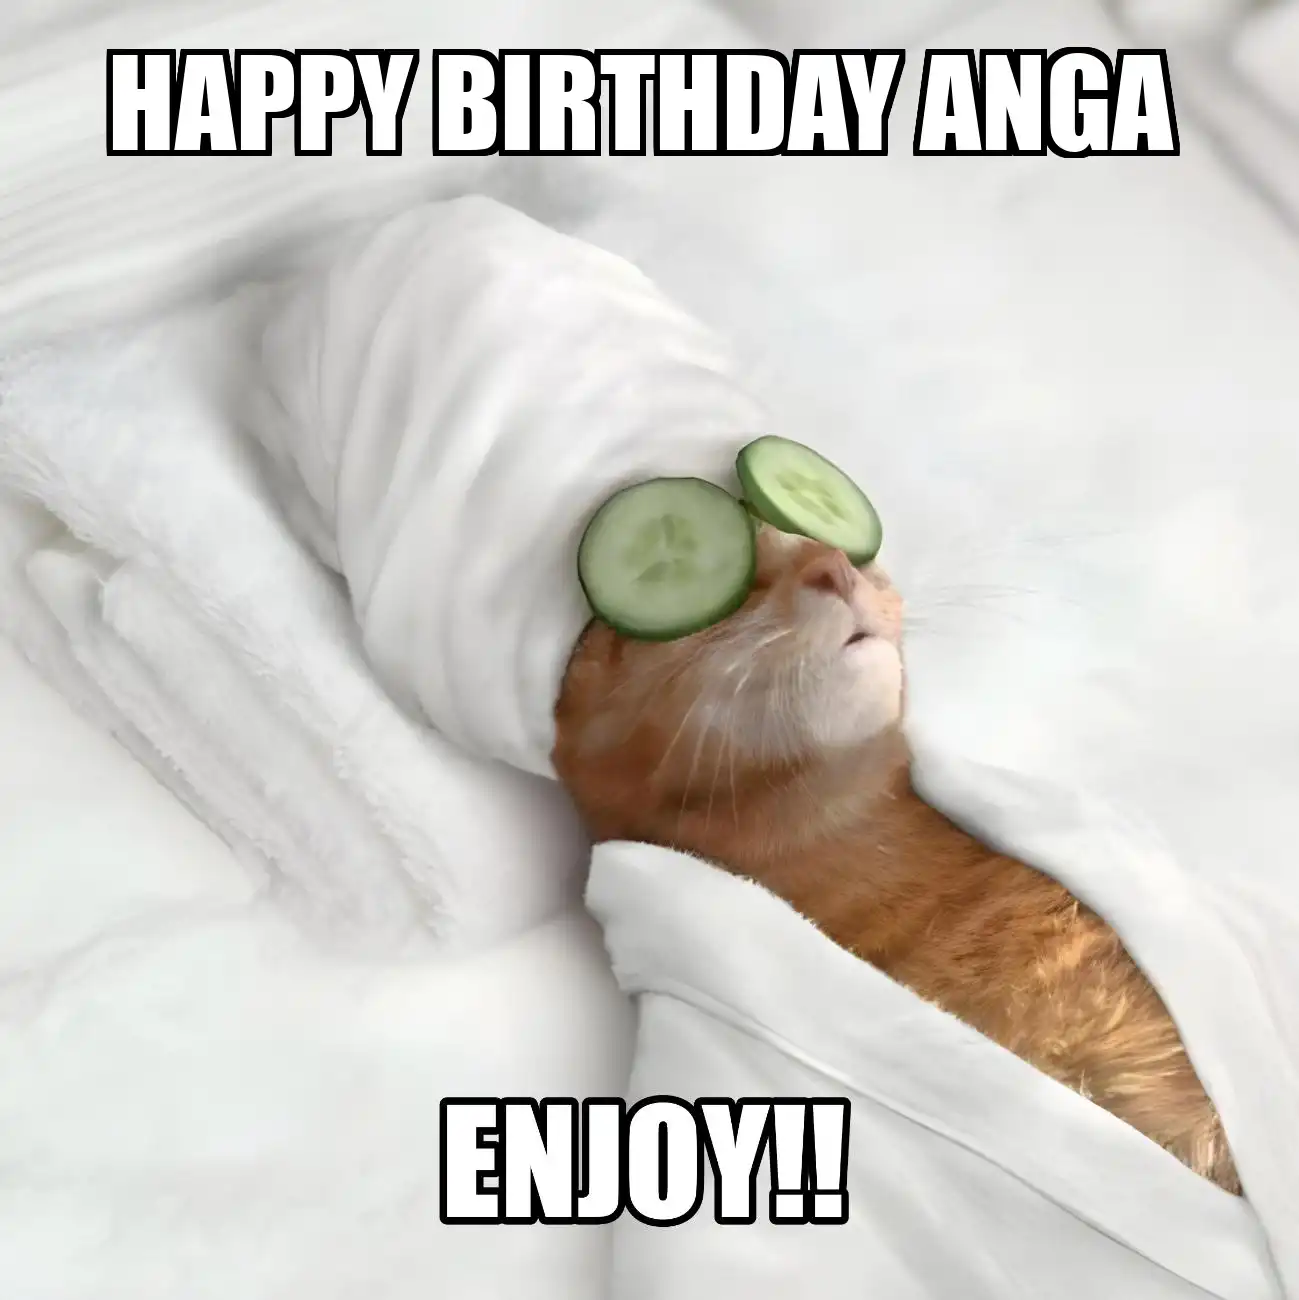 Happy Birthday Anga Enjoy Cat Meme